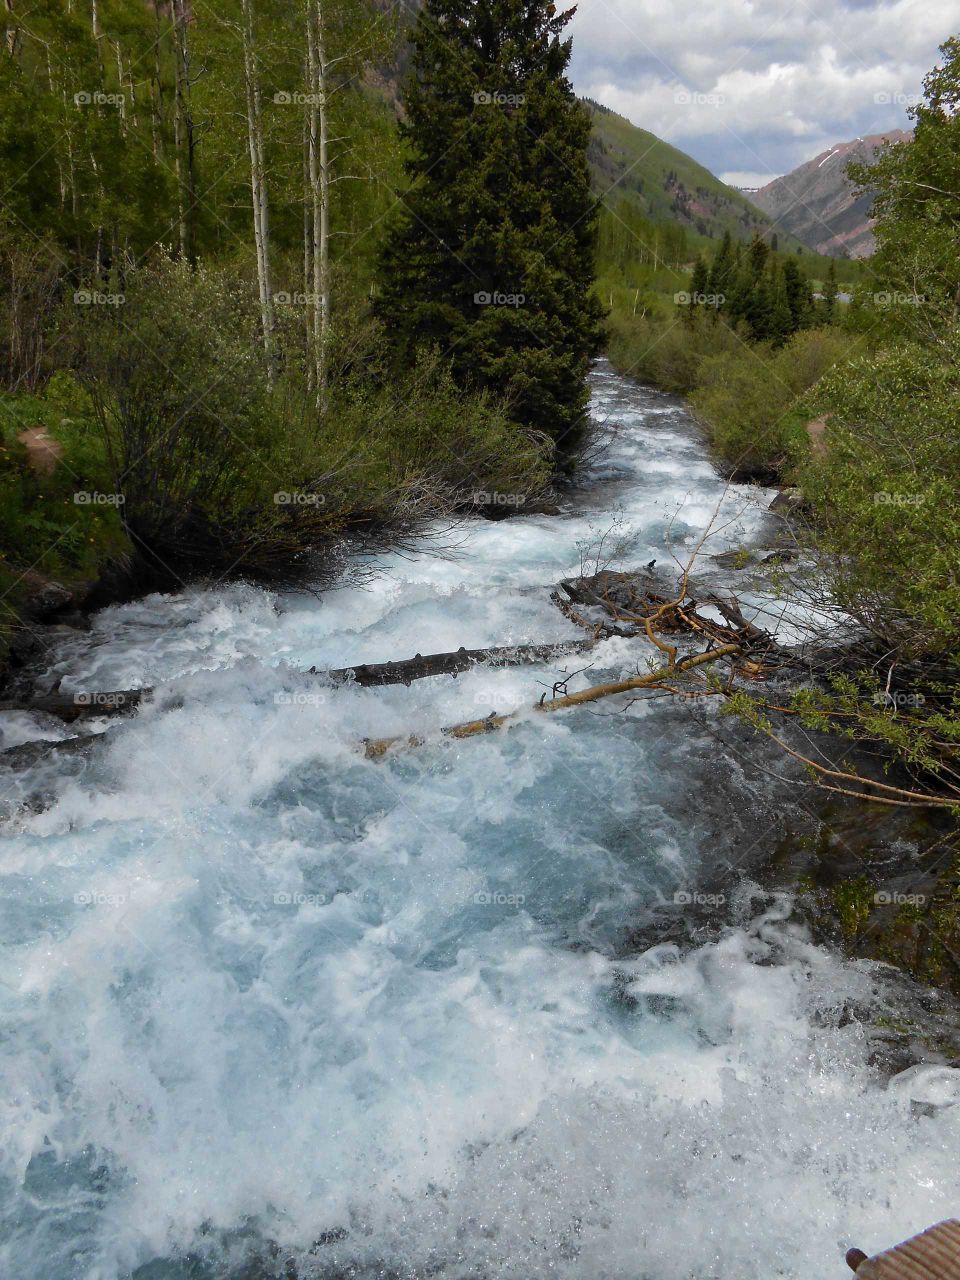 Spring runoff flows wild down Maroon Creek in the Colorado mountains.